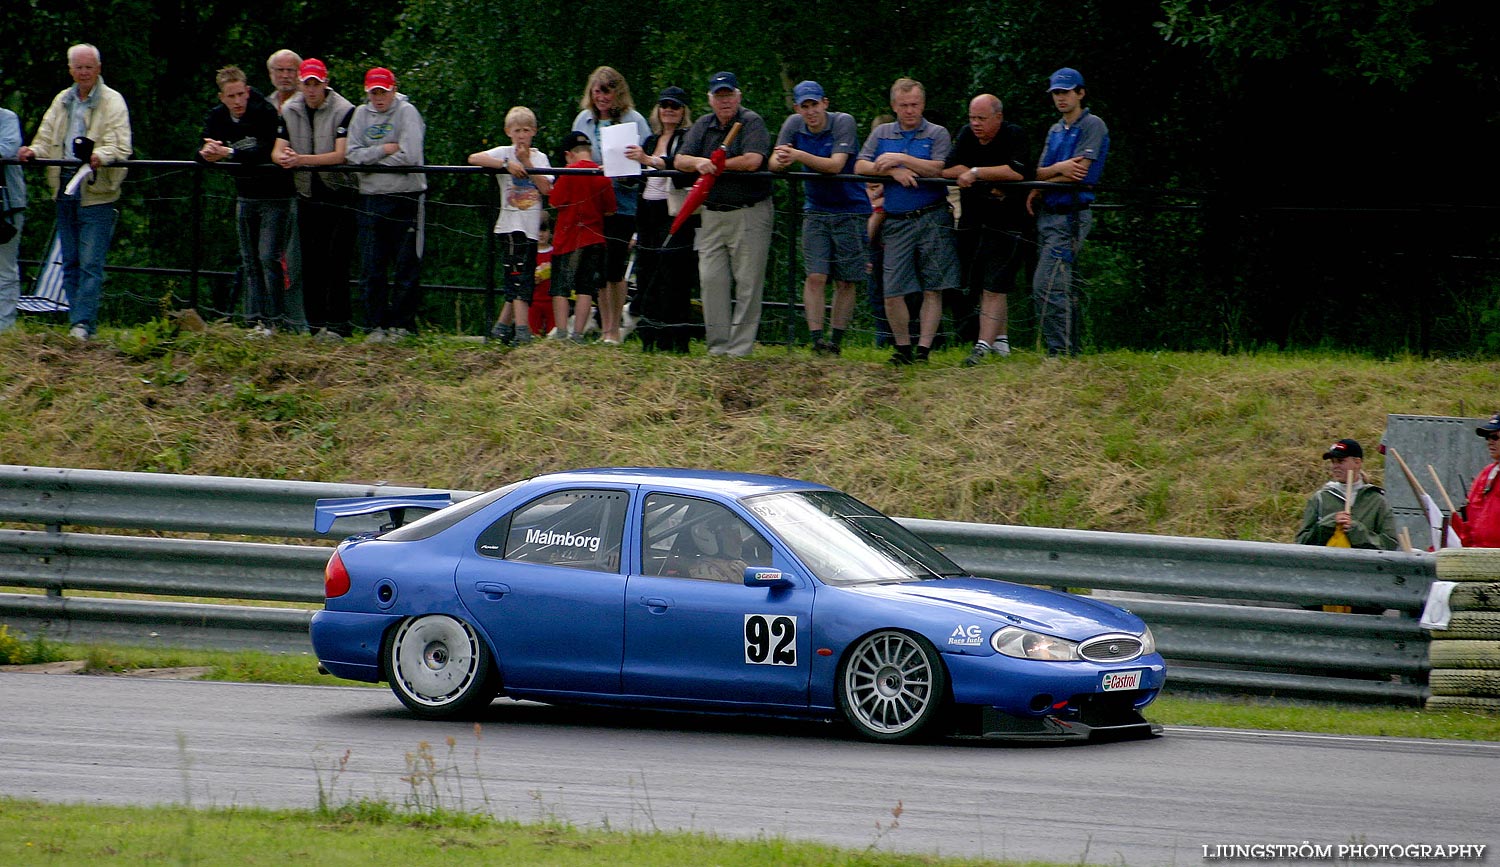 SSK Raceweek,mix,Kinnekulle Ring,Götene,Sverige,Motorsport,,2004,92421